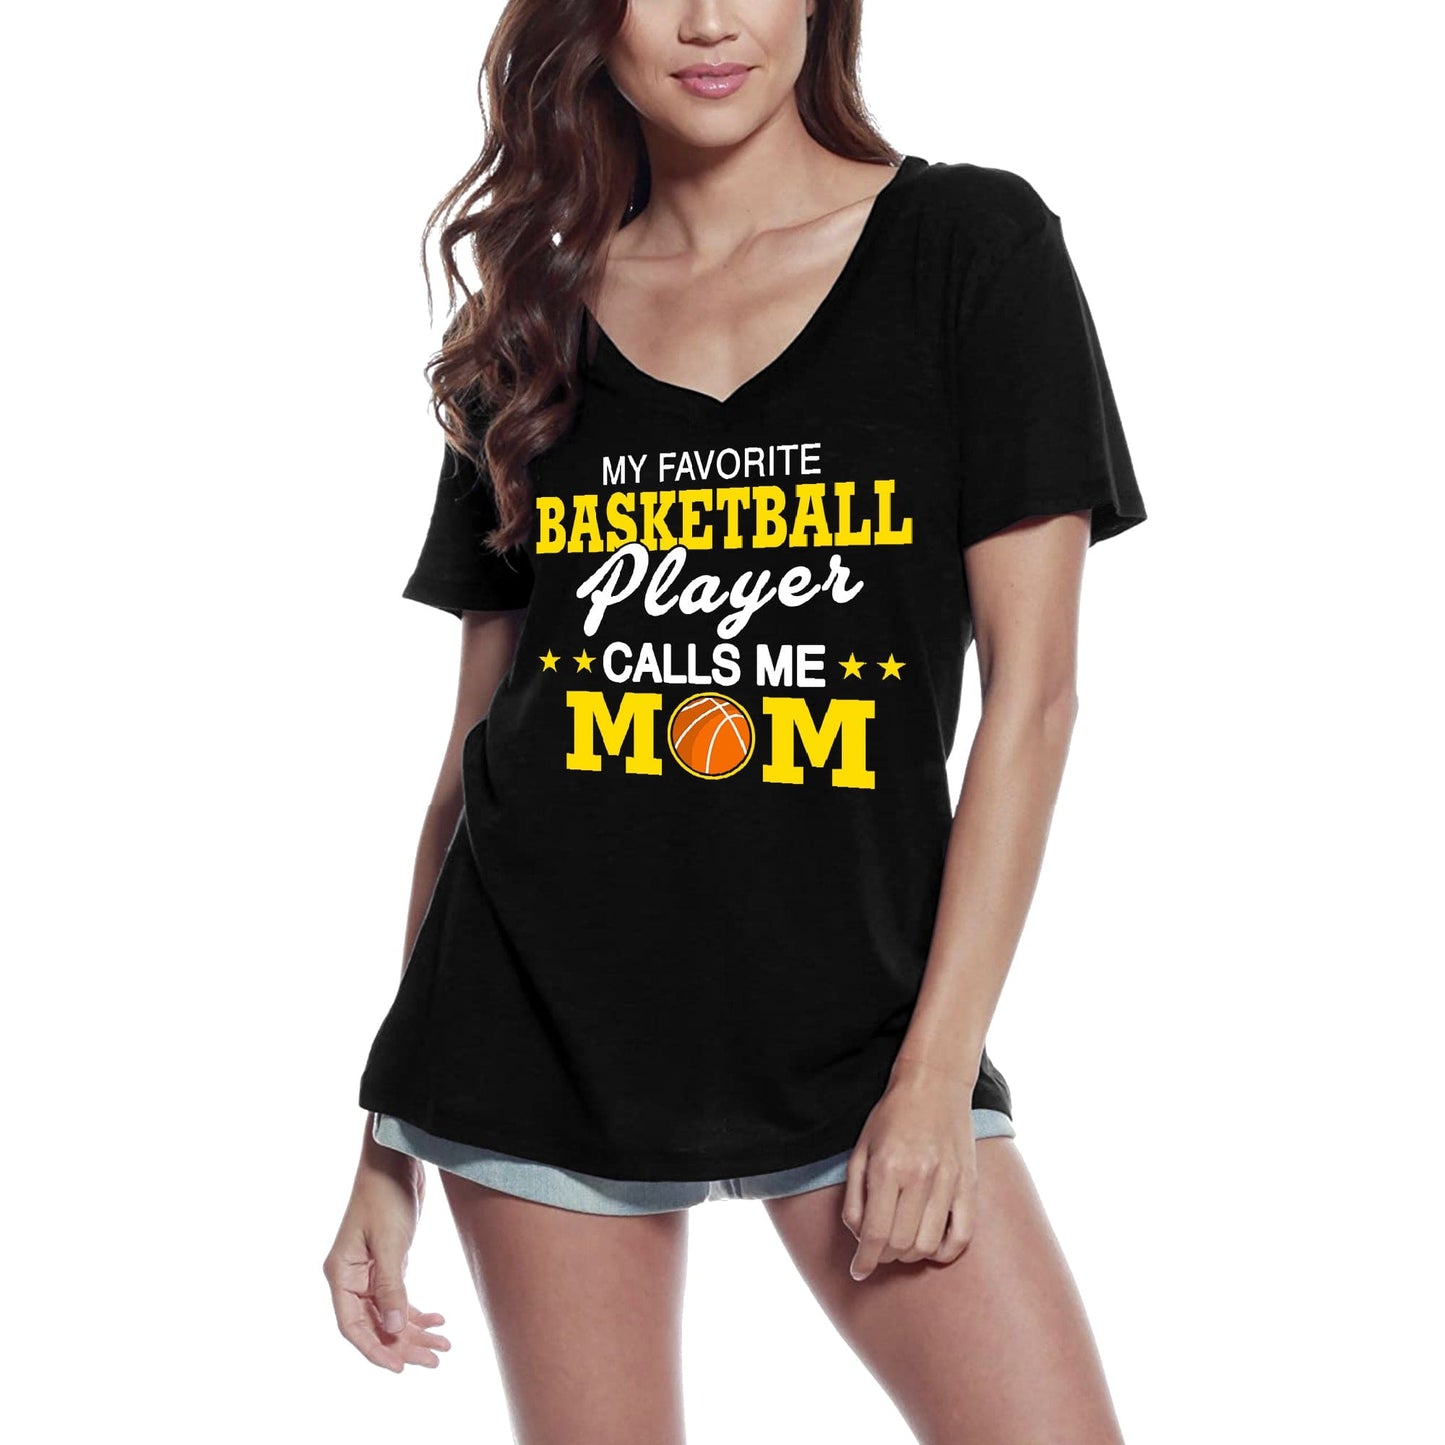 ULTRABASIC Women's T-Shirt My Favorite Basketball Player Calls Me Mom - Short Sleeve Tee Shirt Tops